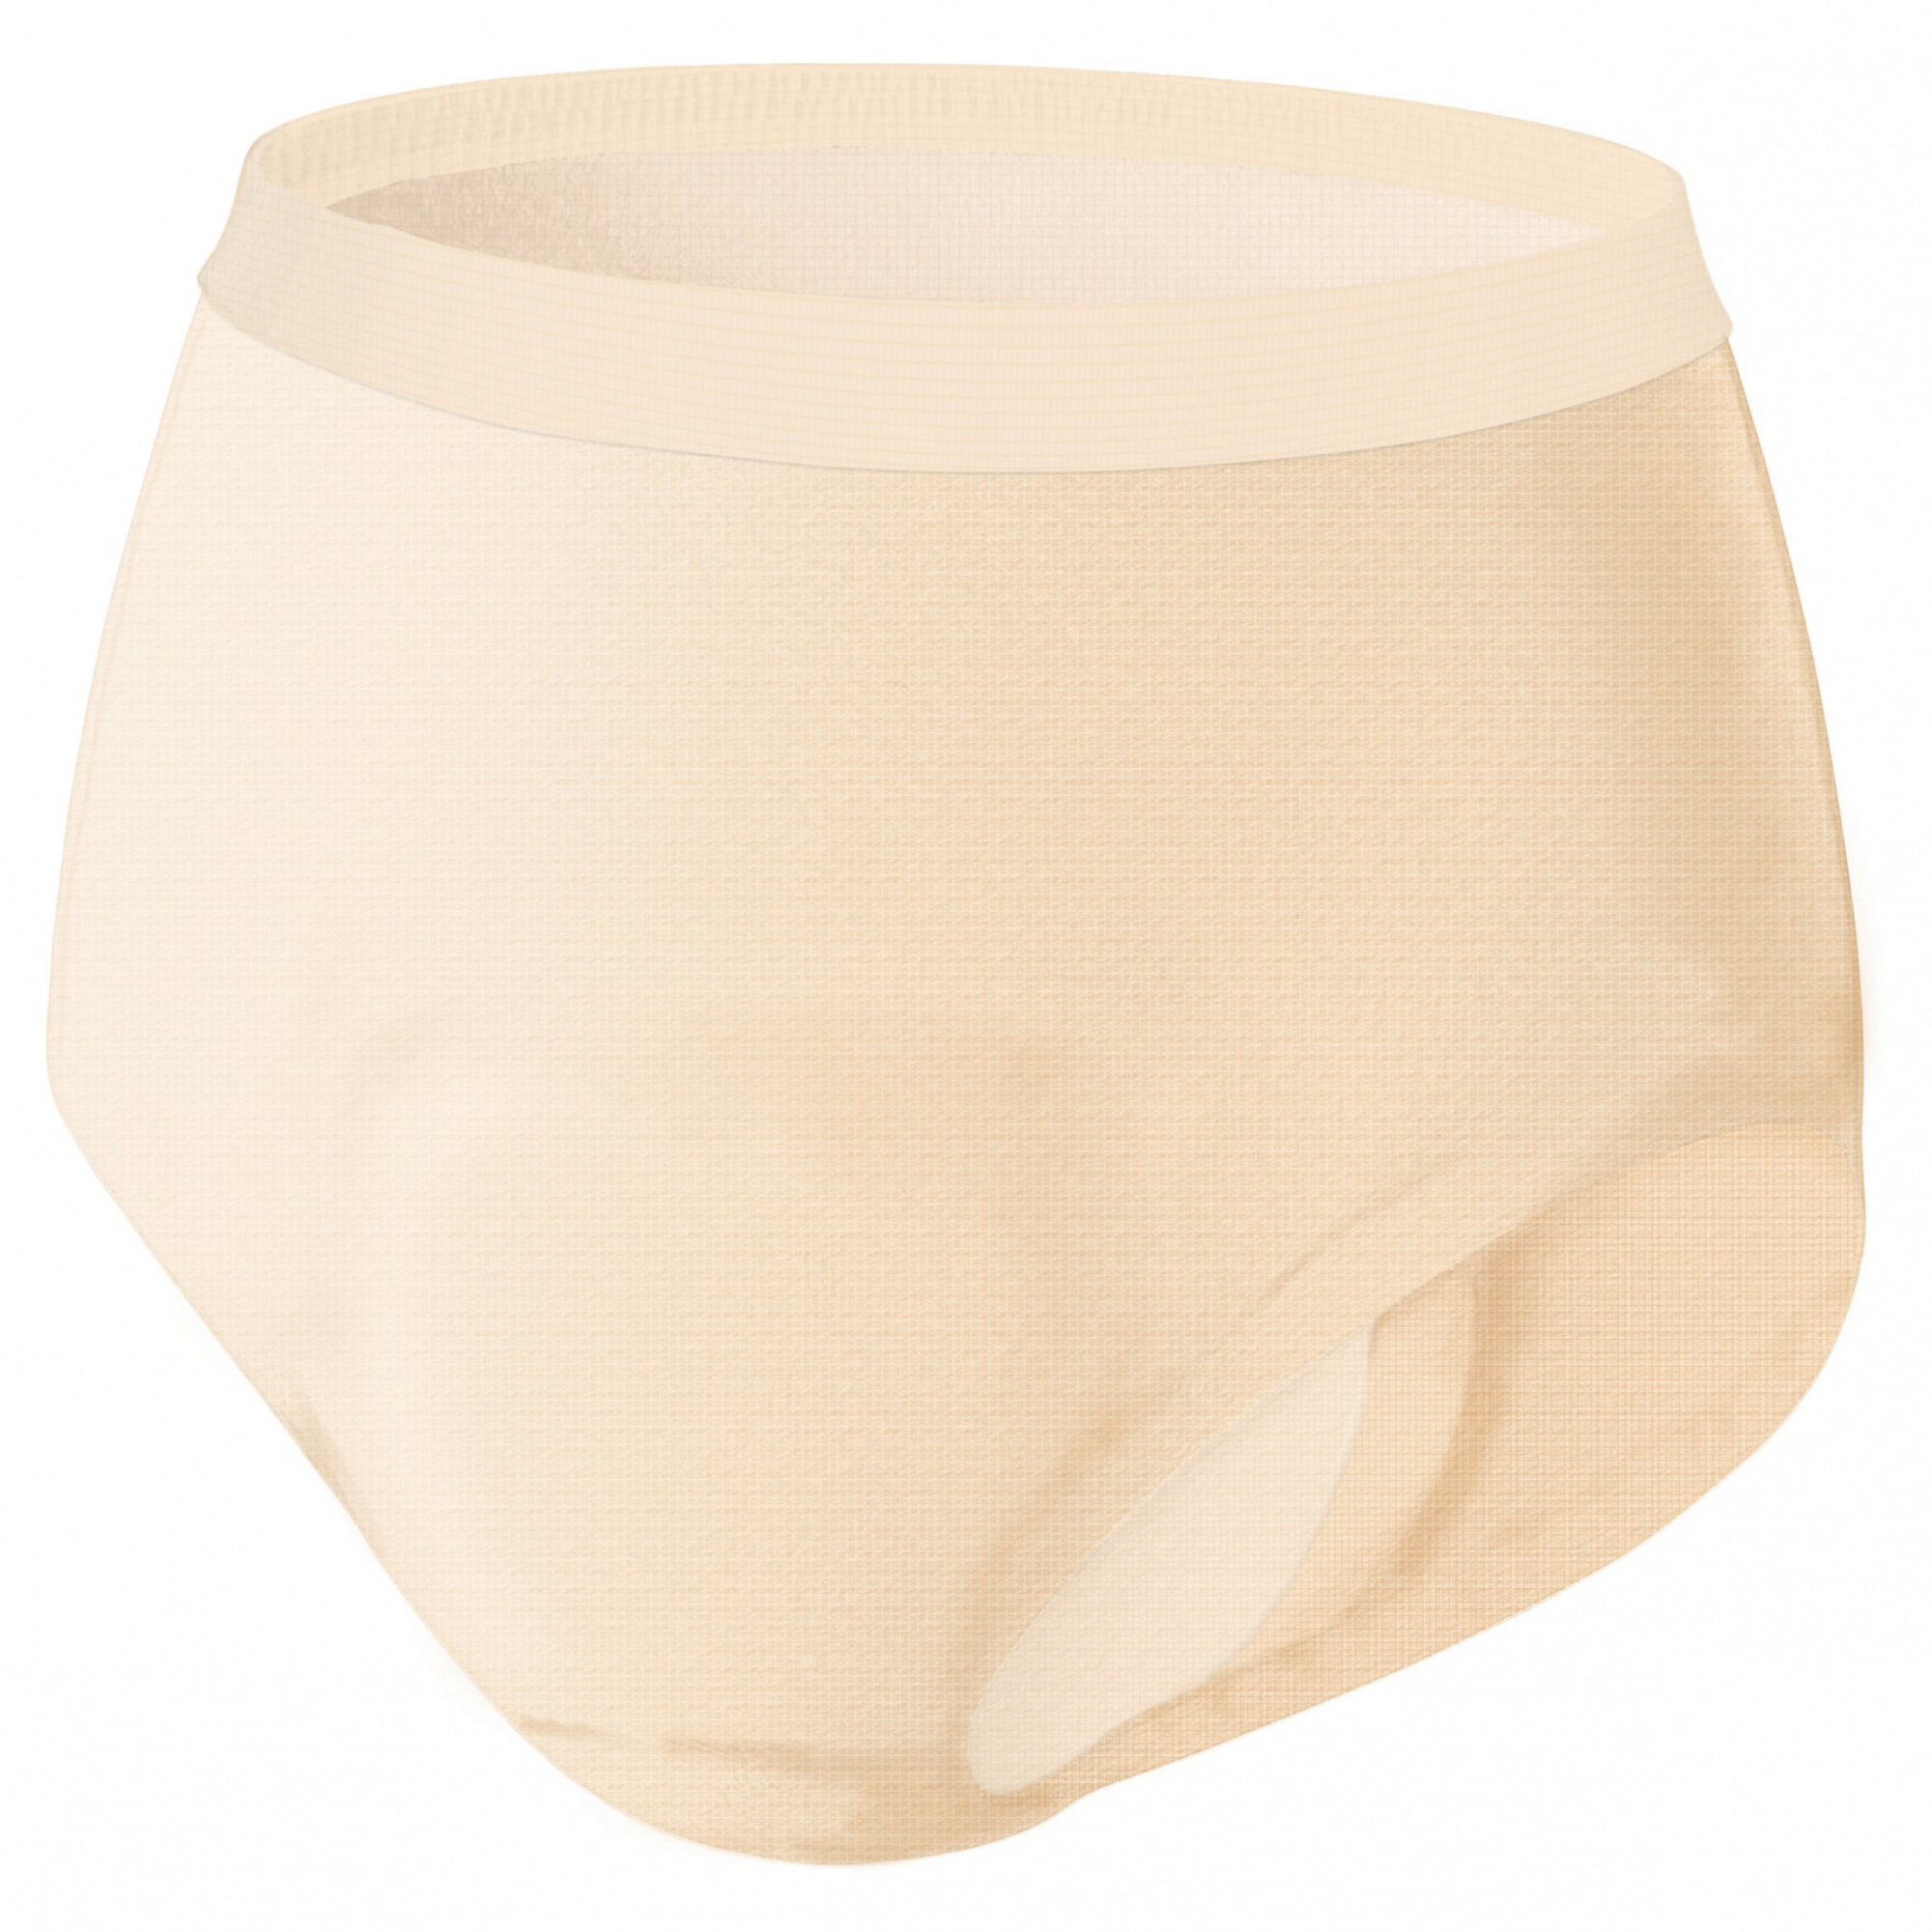 Depend Women Underwear Medium 8s - ANZ Pharma Wholesalers LTD